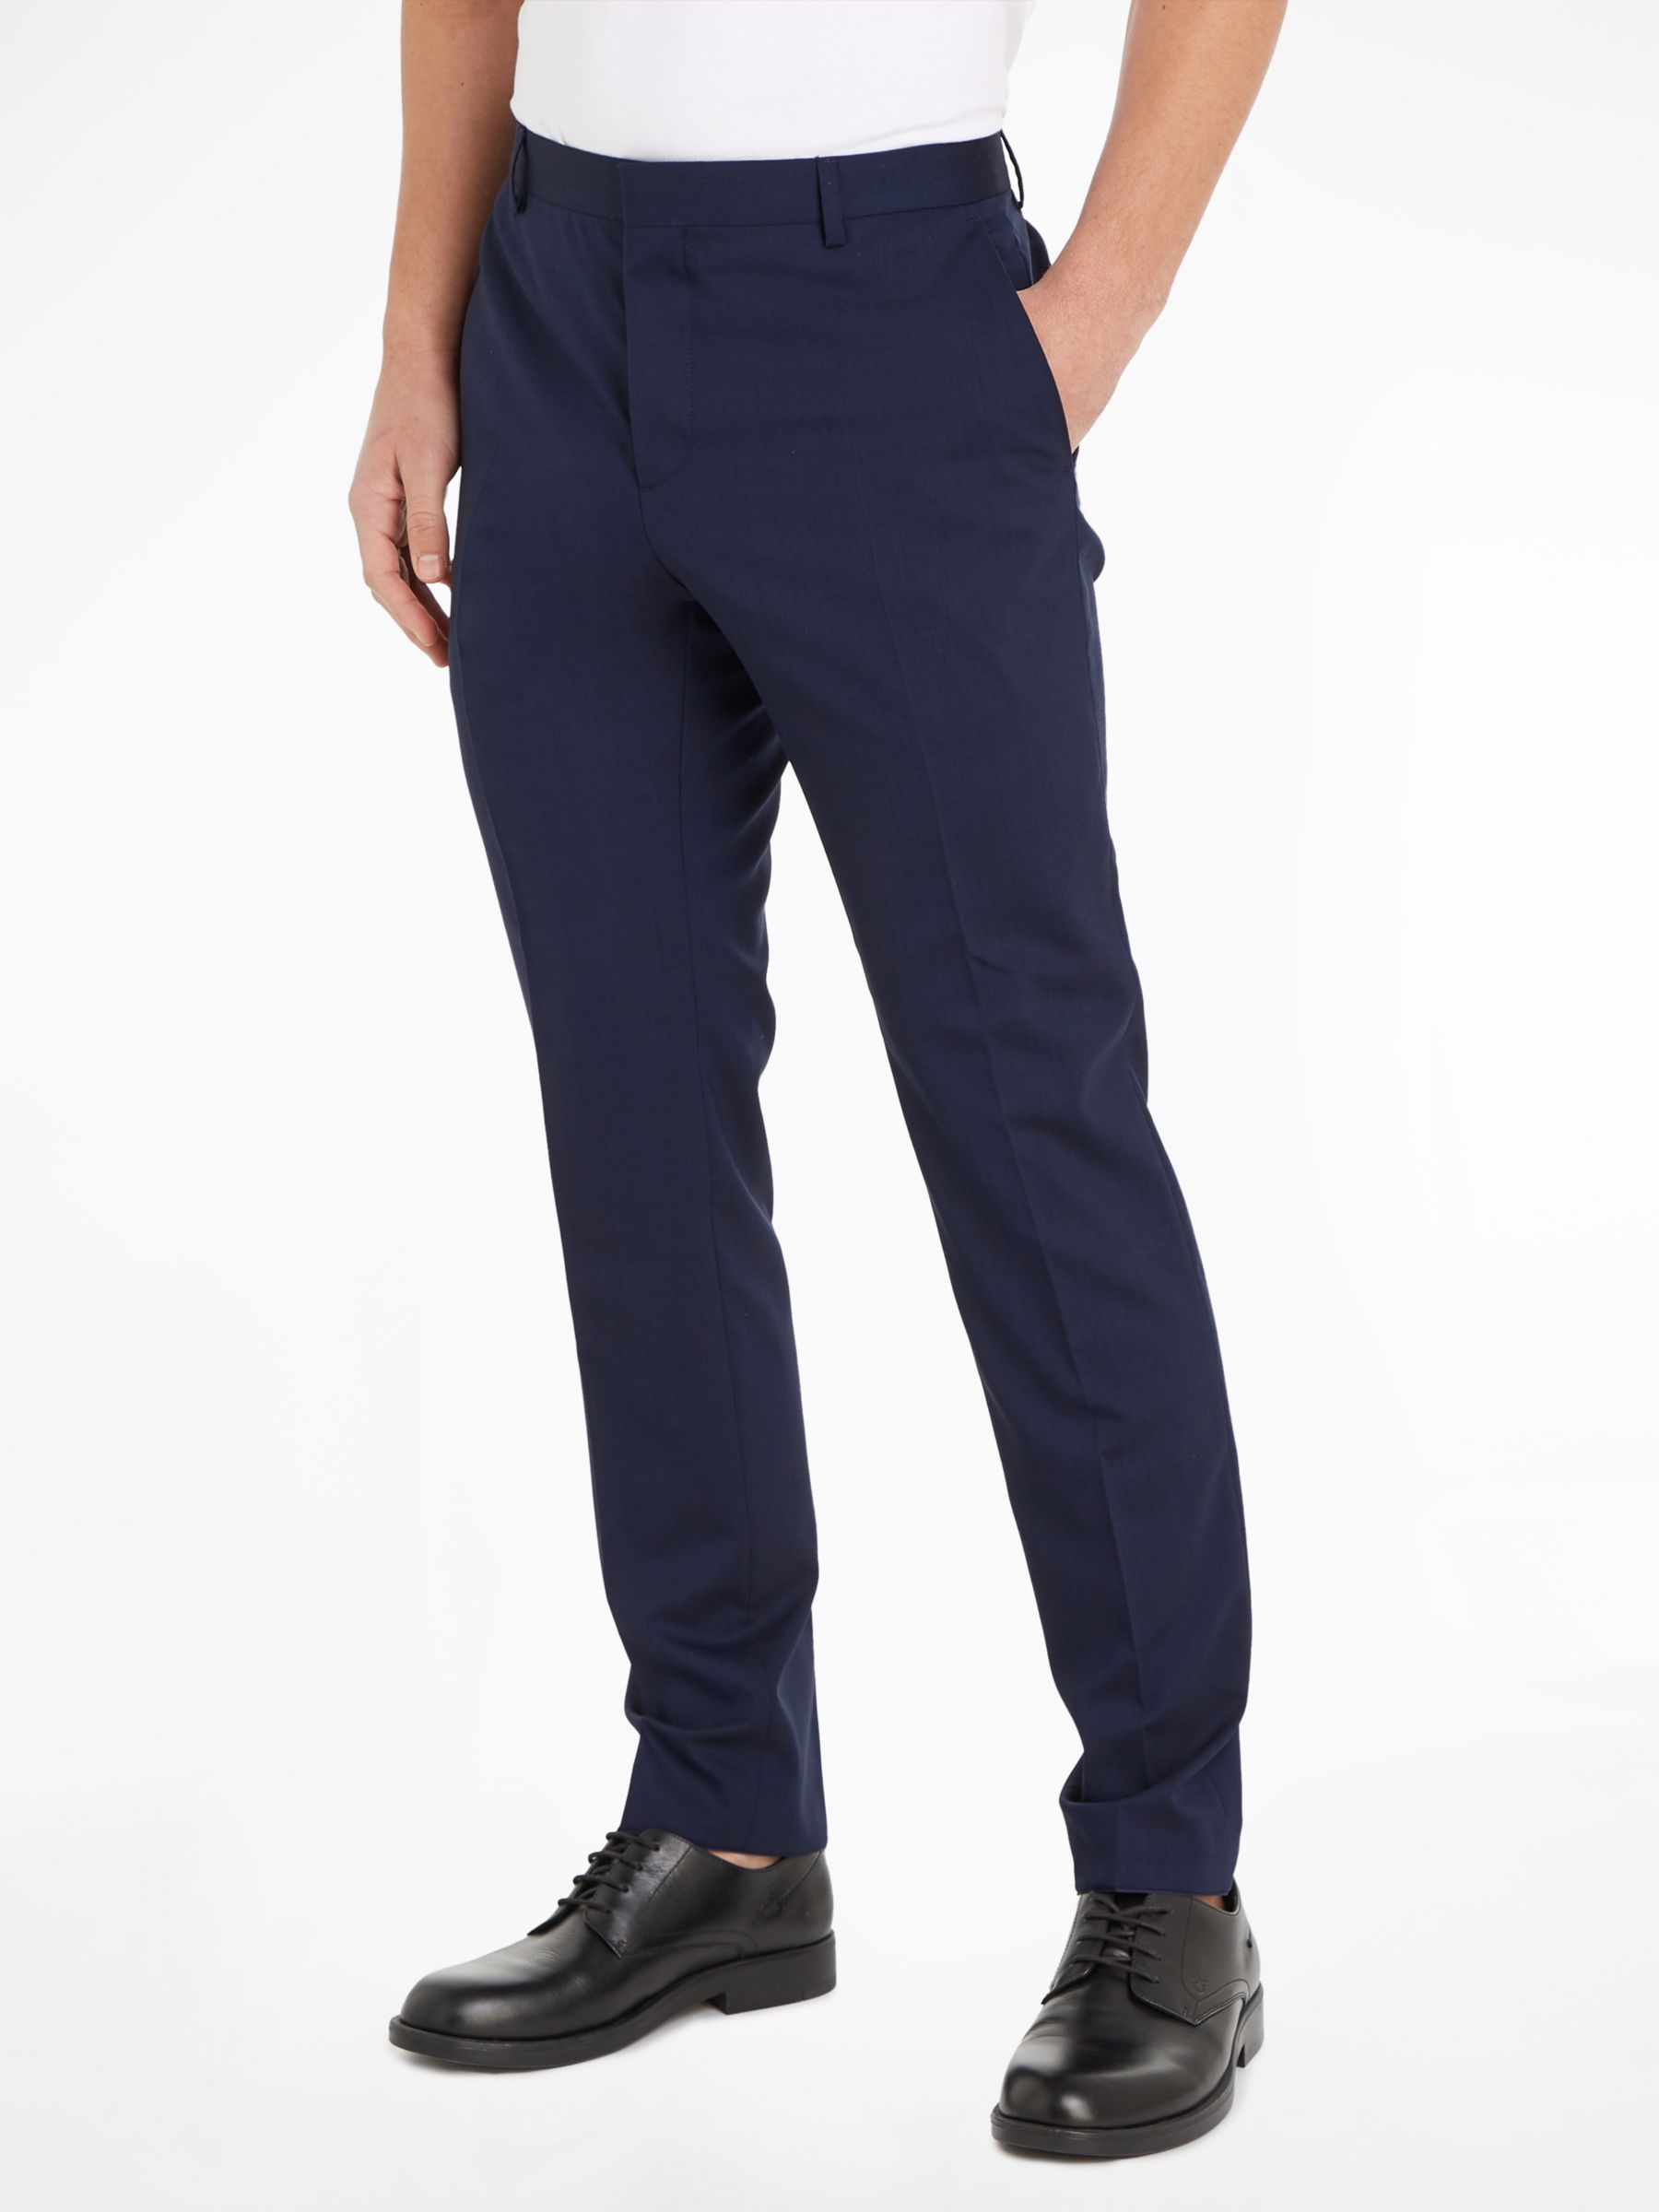 Calvin Klein Slim Fit Stretch Wool Blend Trousers, Ink Blue, 38